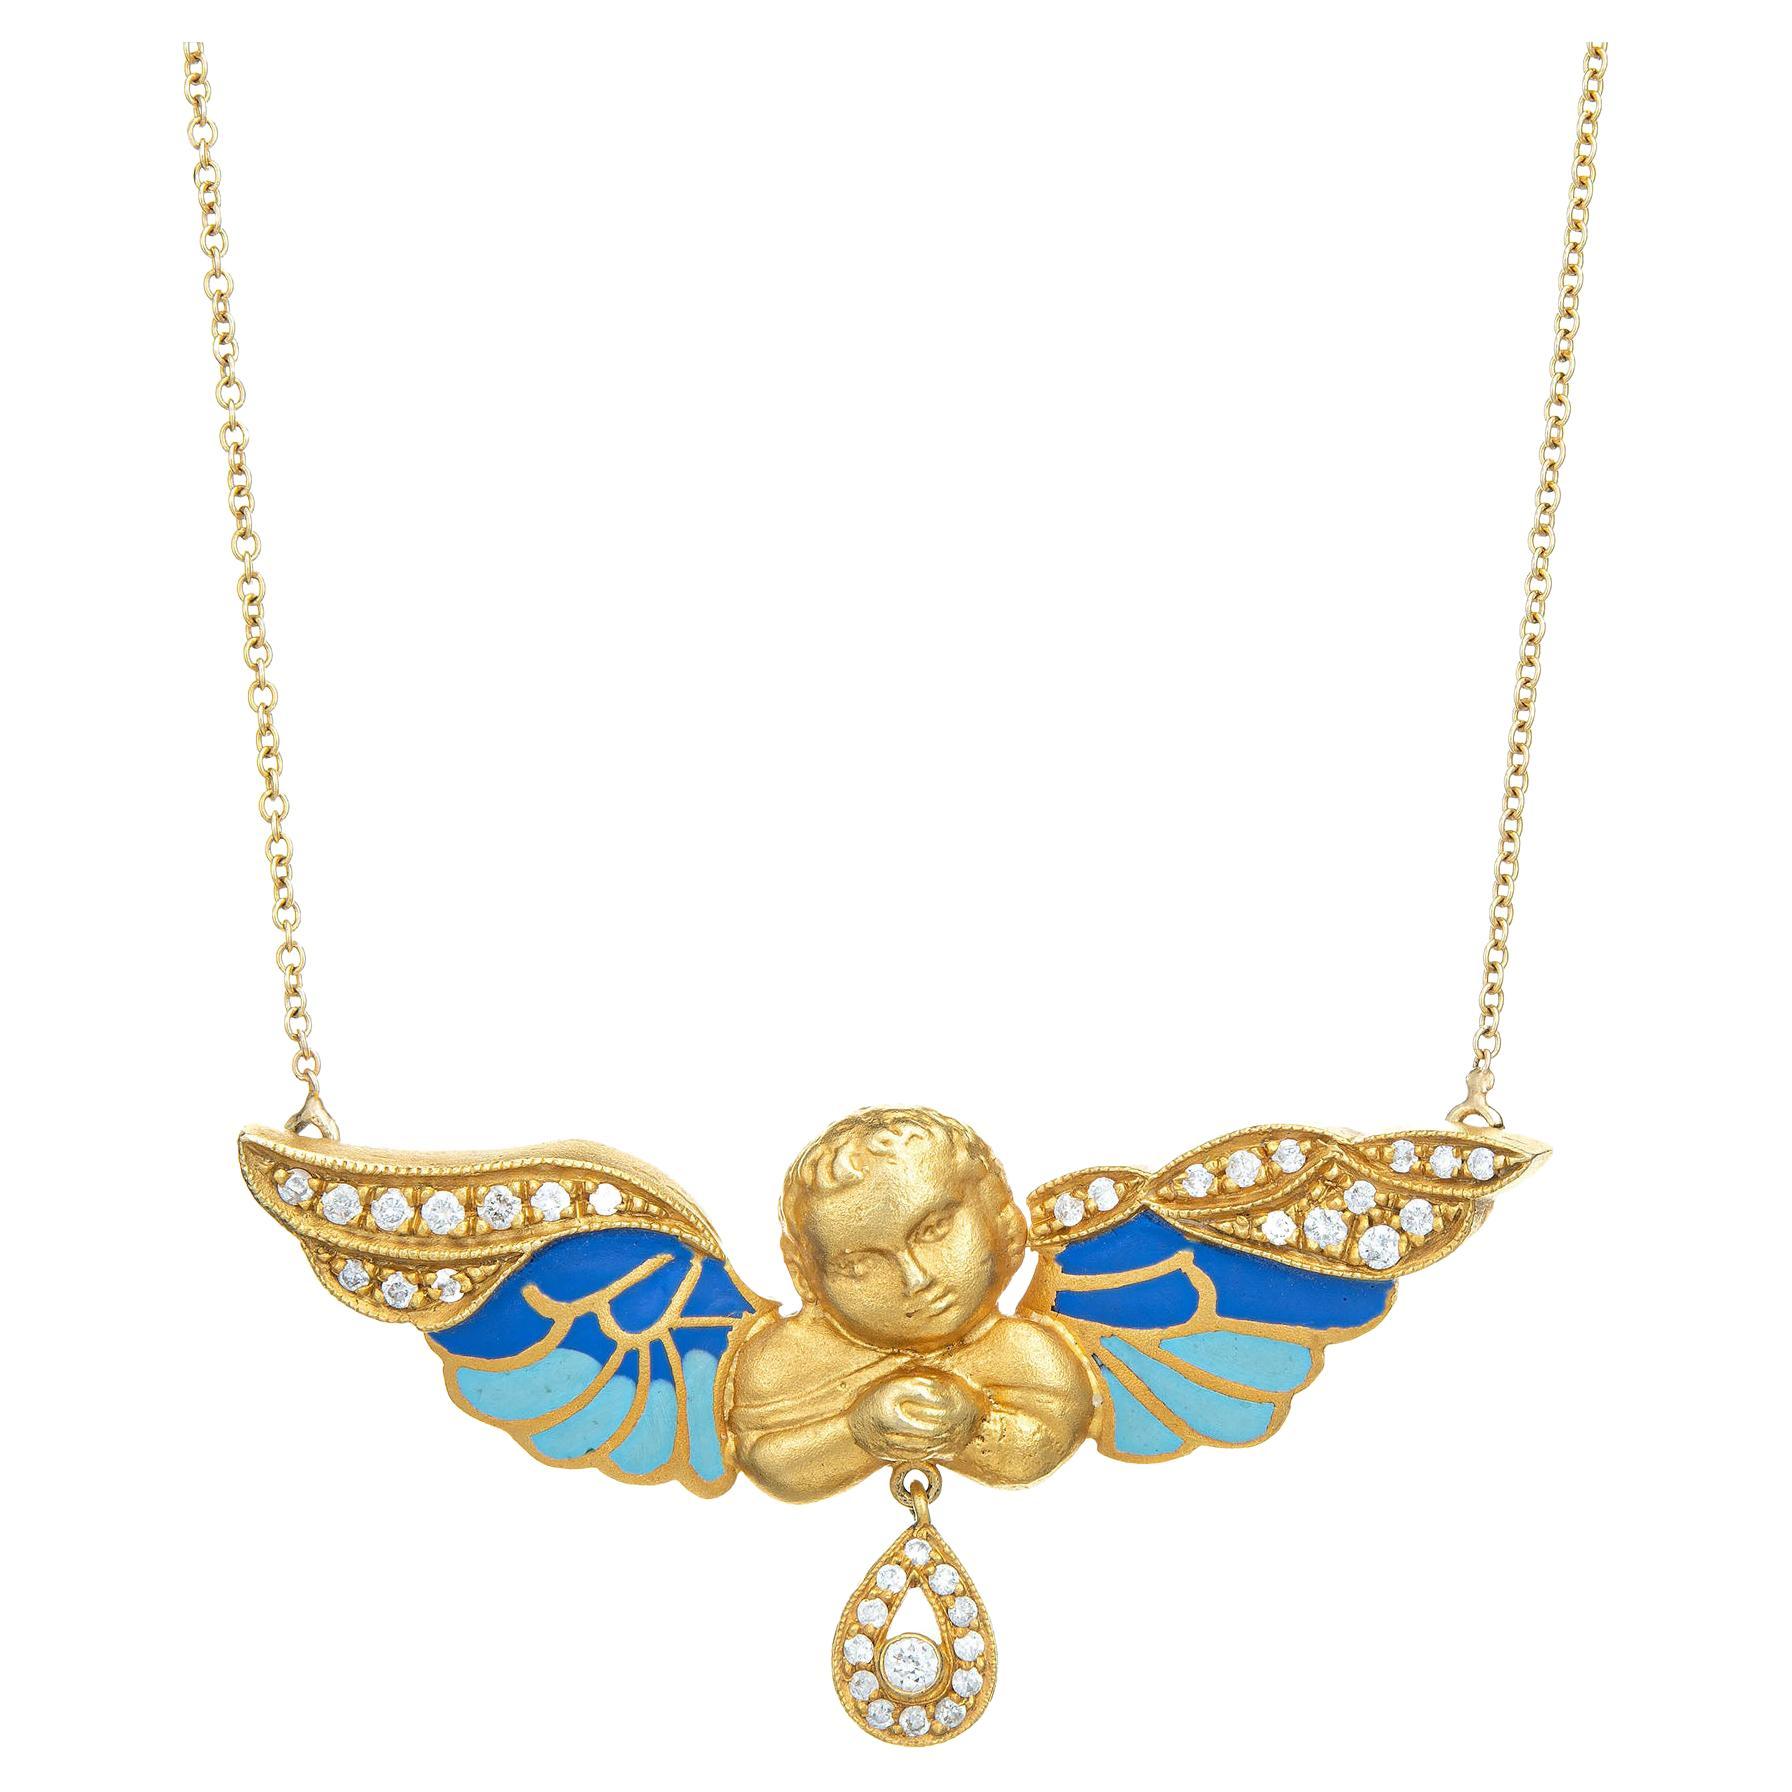 Winged Angel Necklace Diamond Enamel Vintage 14k Yellow Gold Chain Jewelry